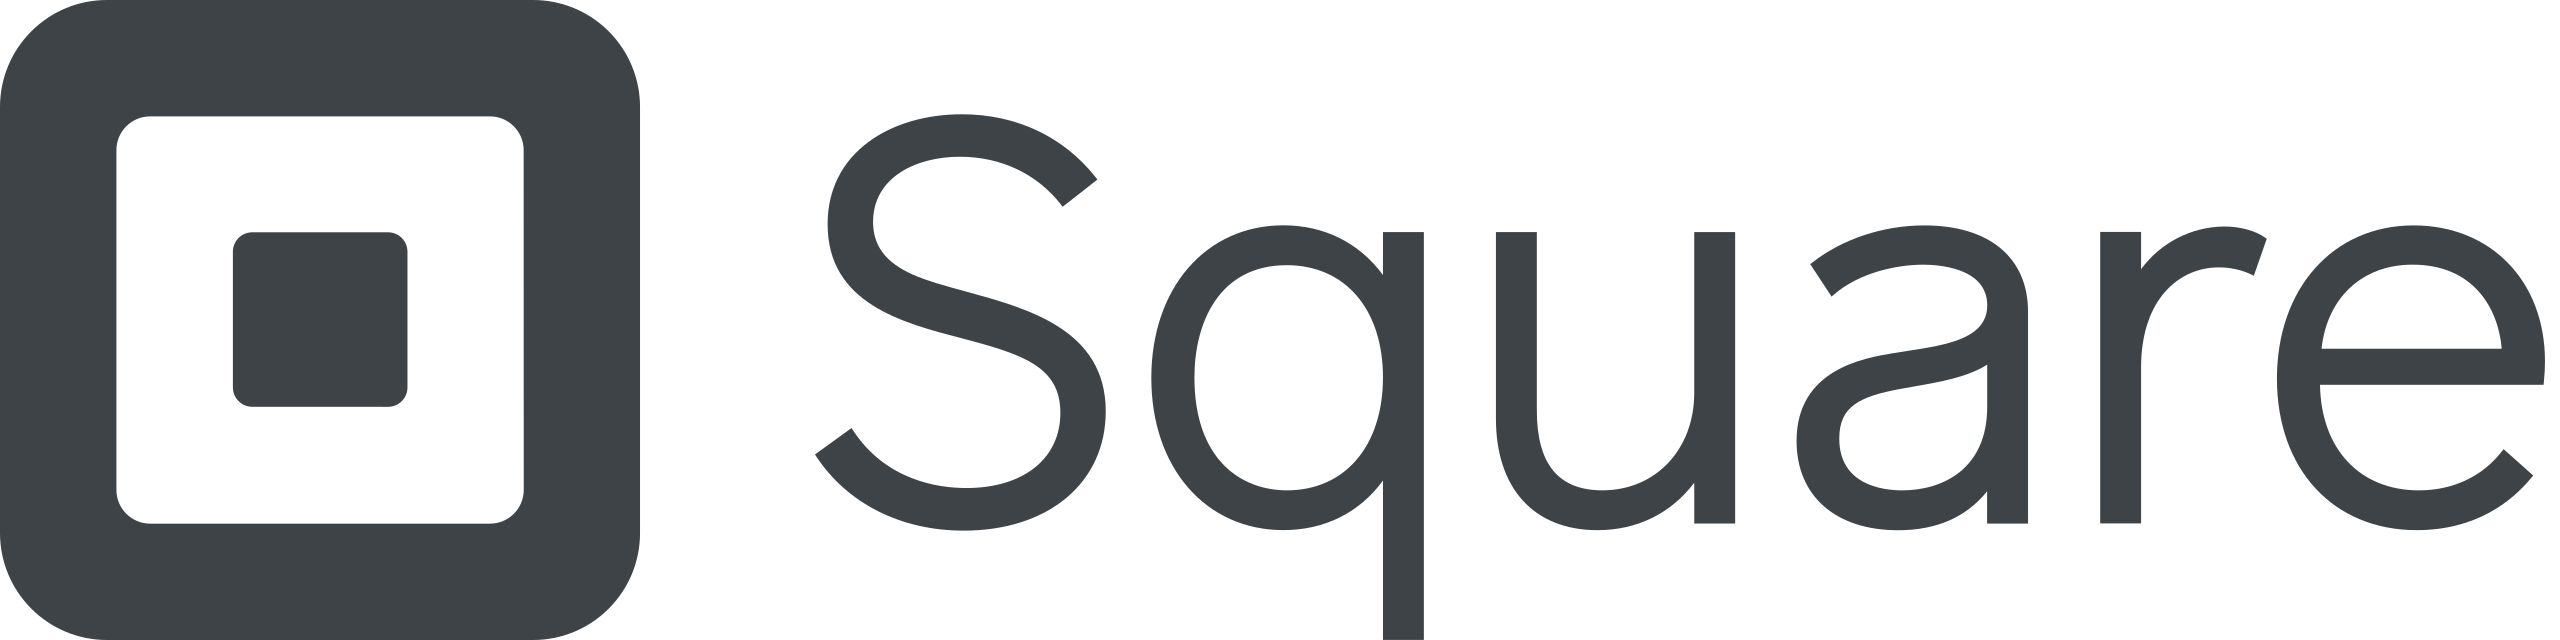 Square logo at Fintech Compass